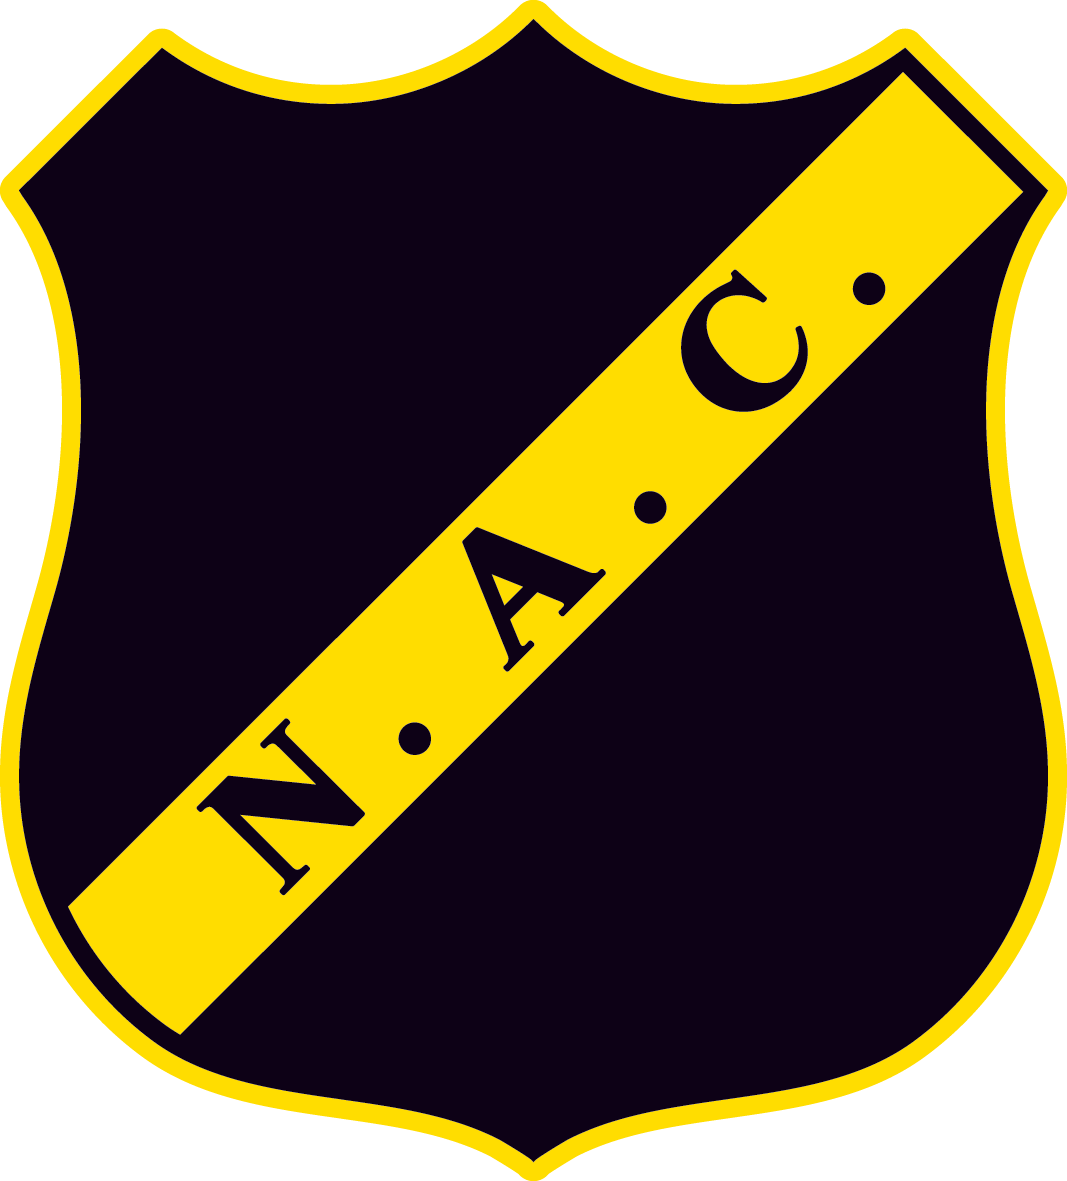 NAC Breda (1)